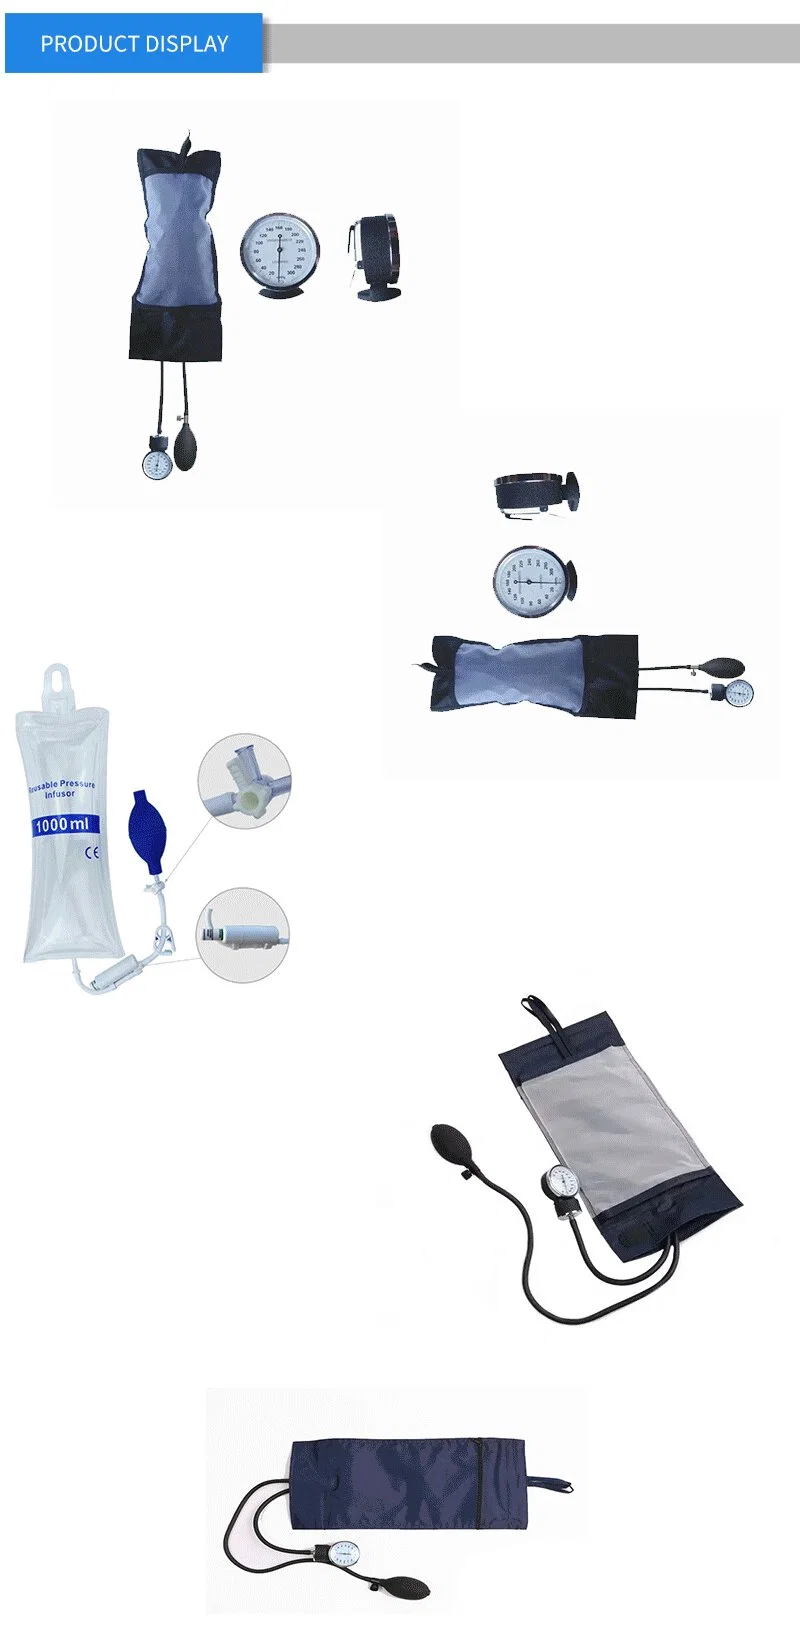 Medical 1000ml Manual Insufflator/Pressure Infusion Infusor Infuser Cuff Bag